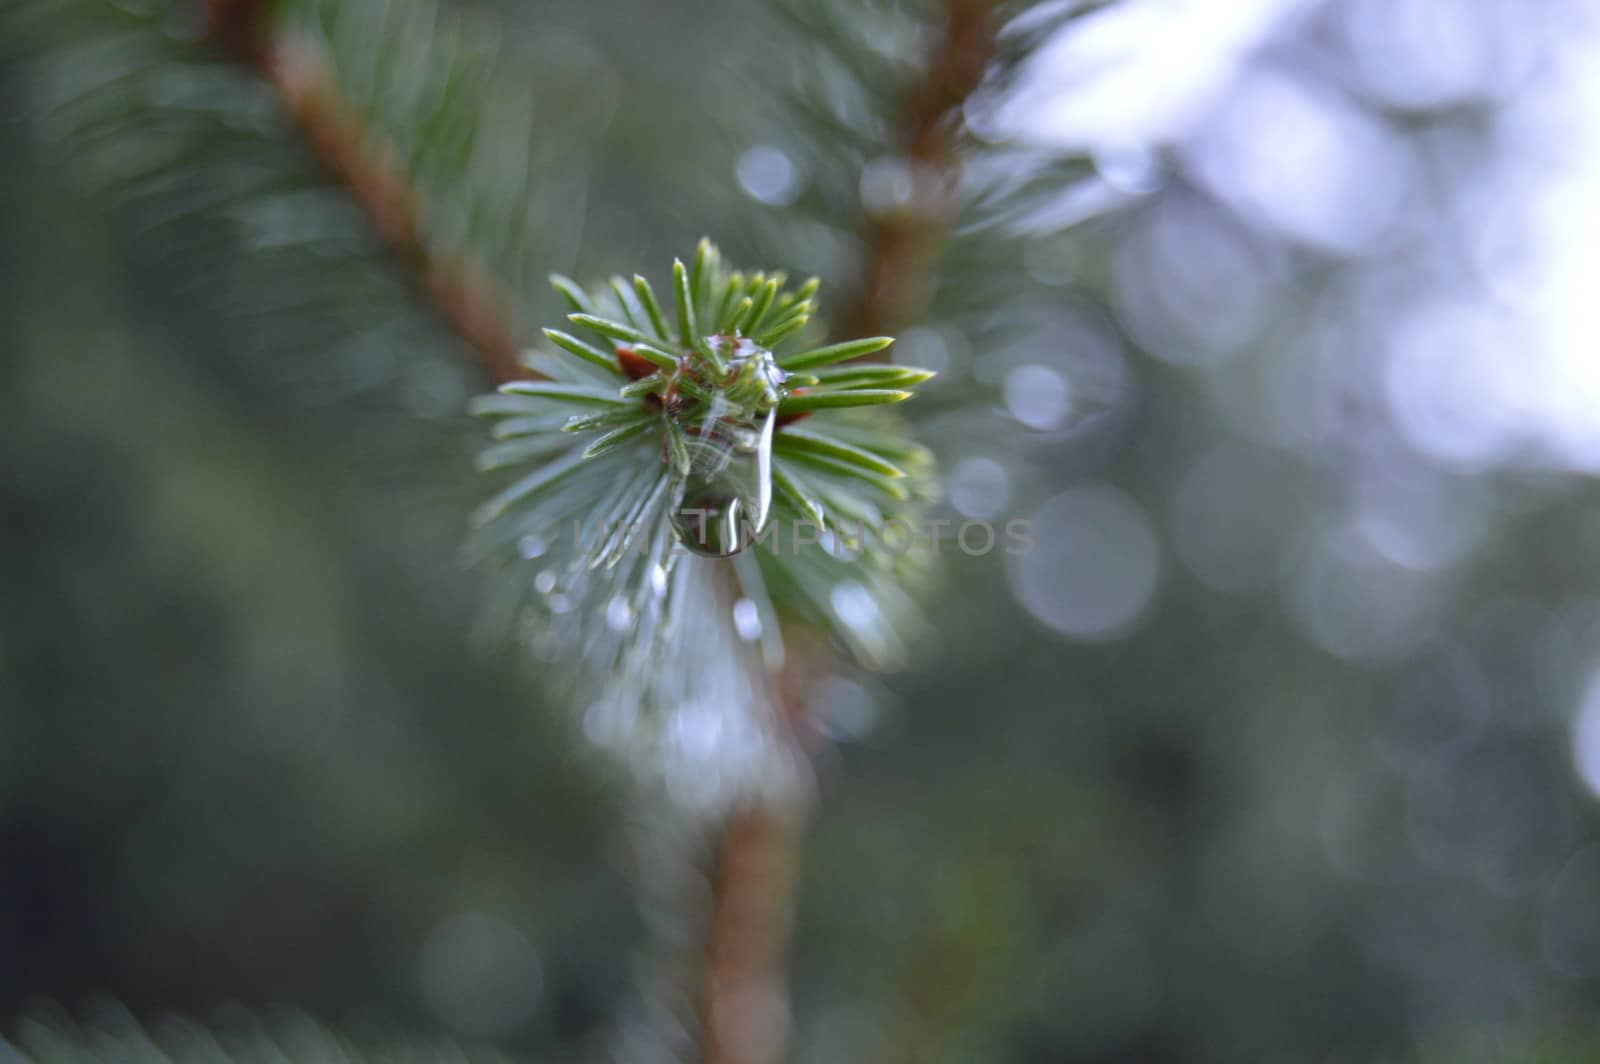 Norwegian spruce by Meretemy@hotmail.com